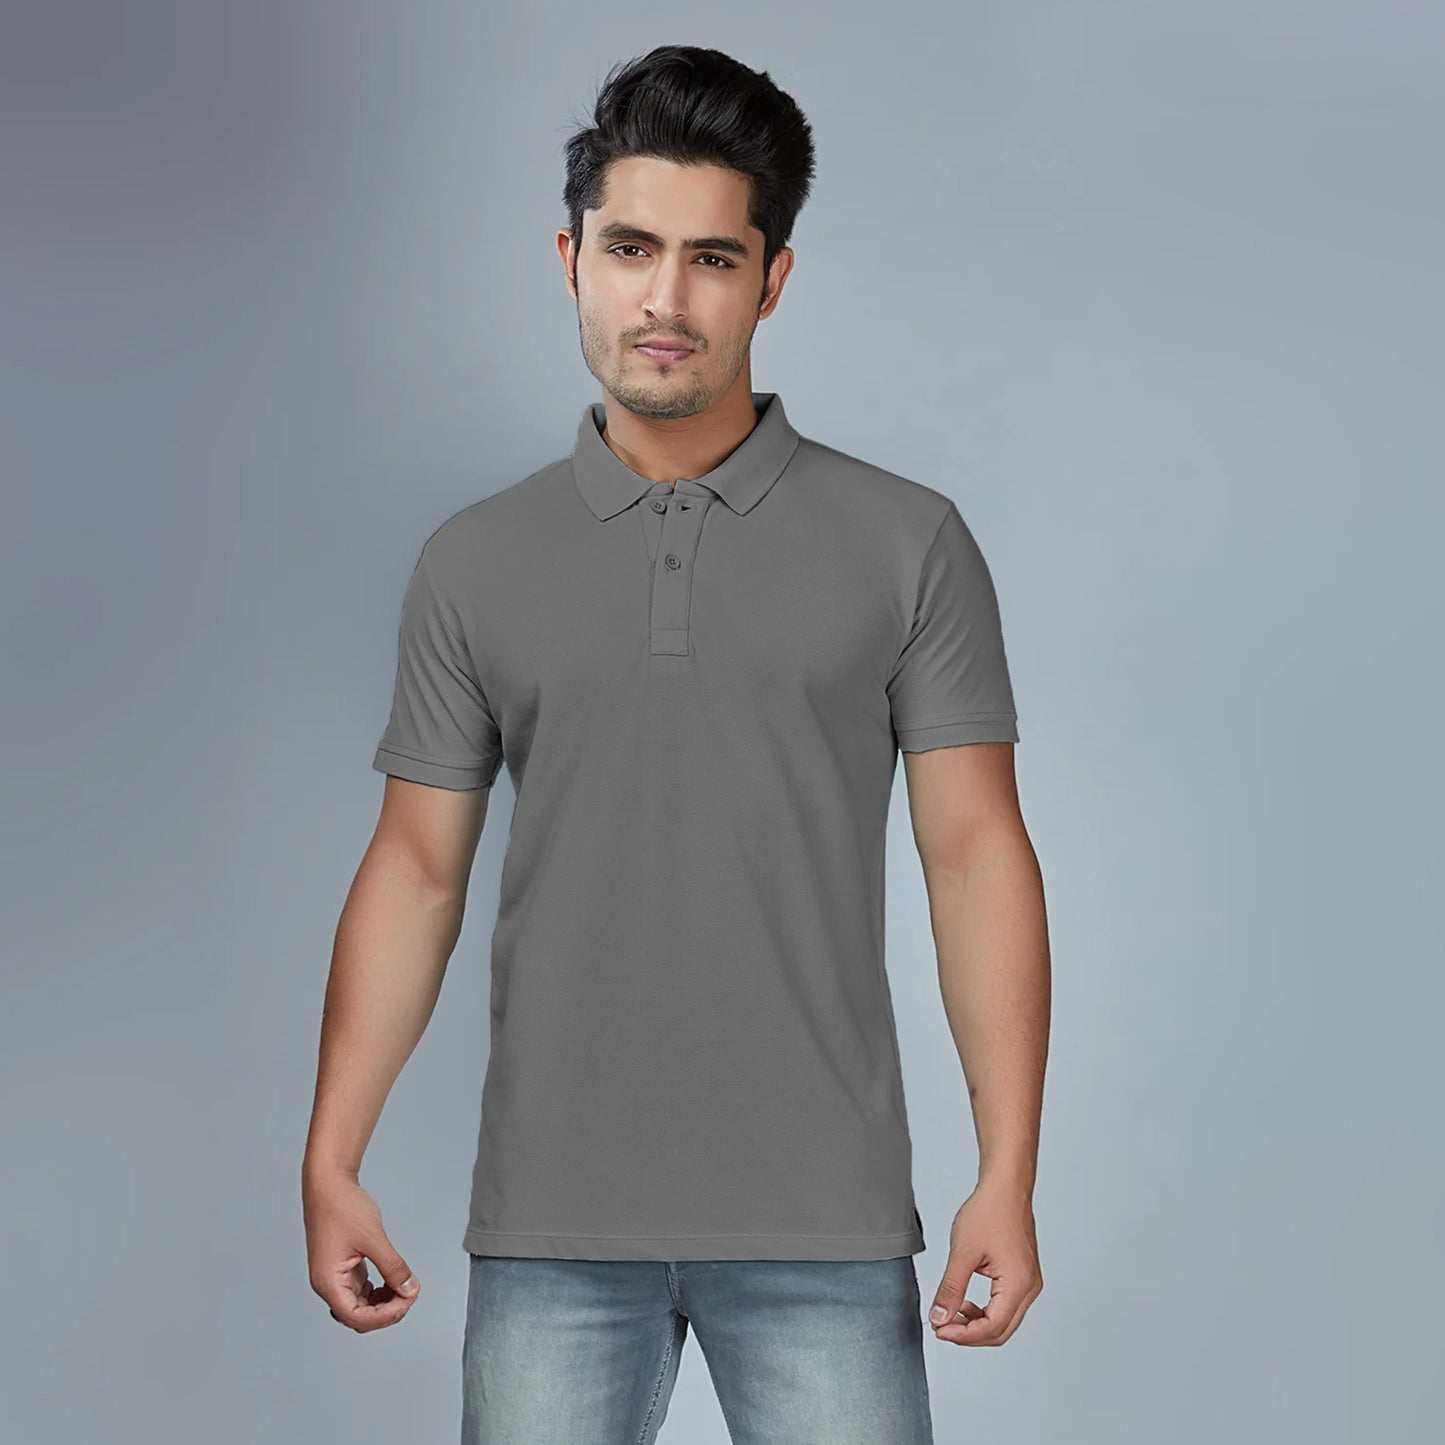 Men's Steel Gray Polo T-Shirt